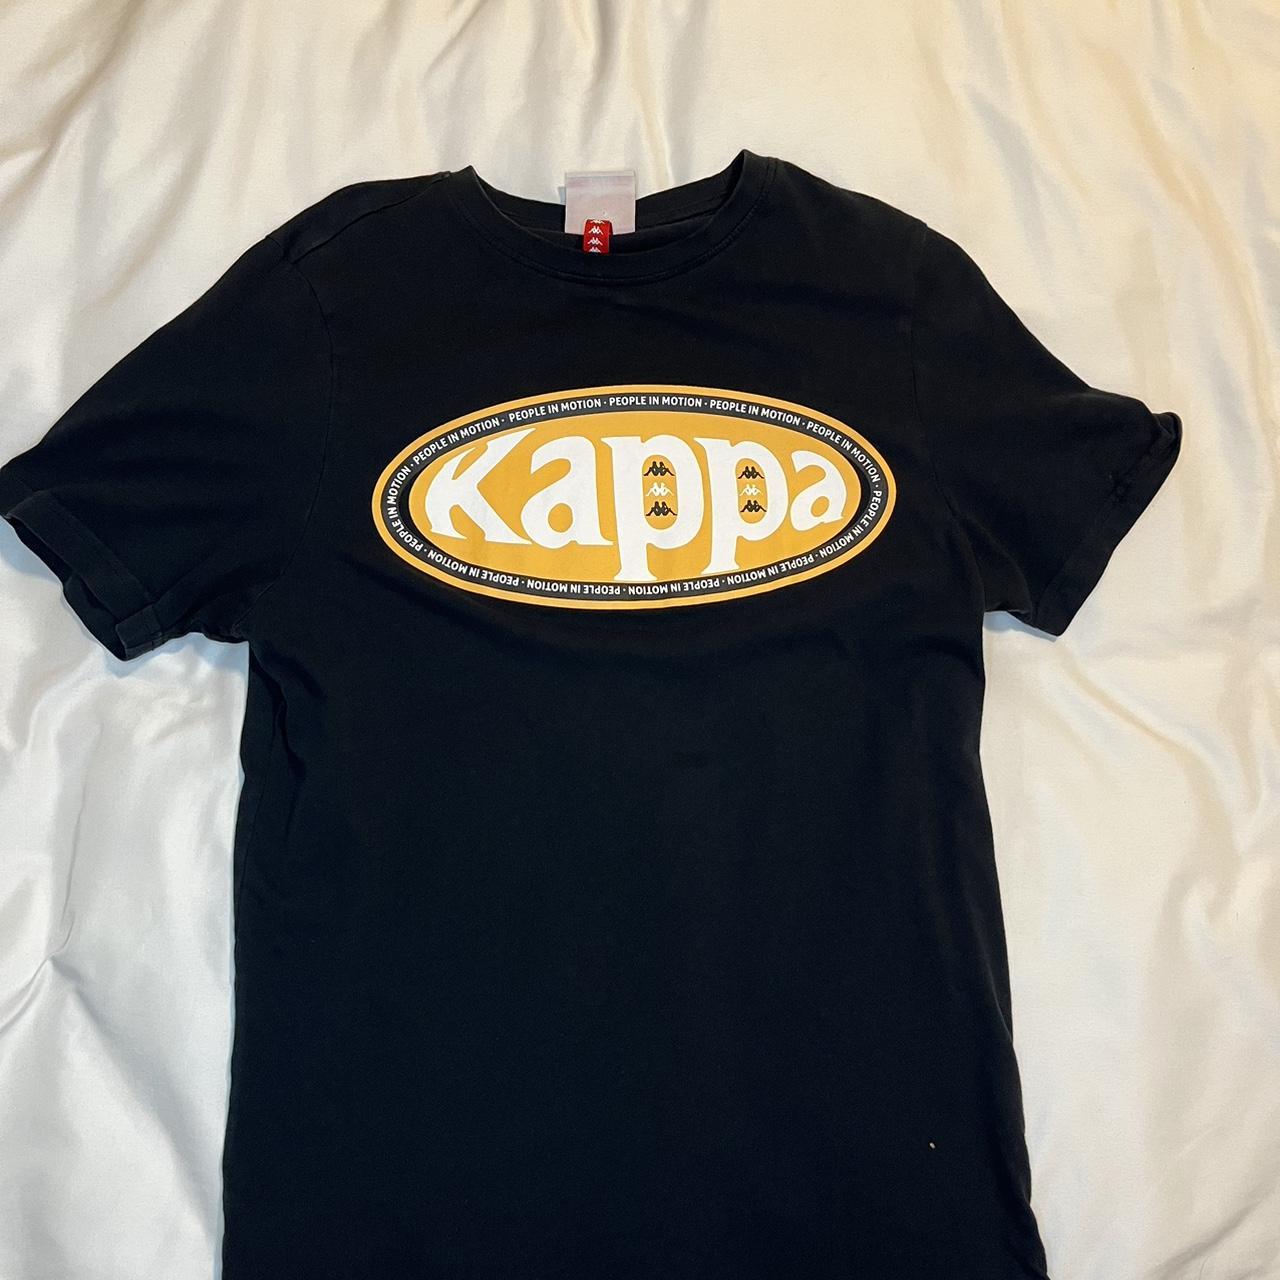 KAPPA, Black Men's T-shirt